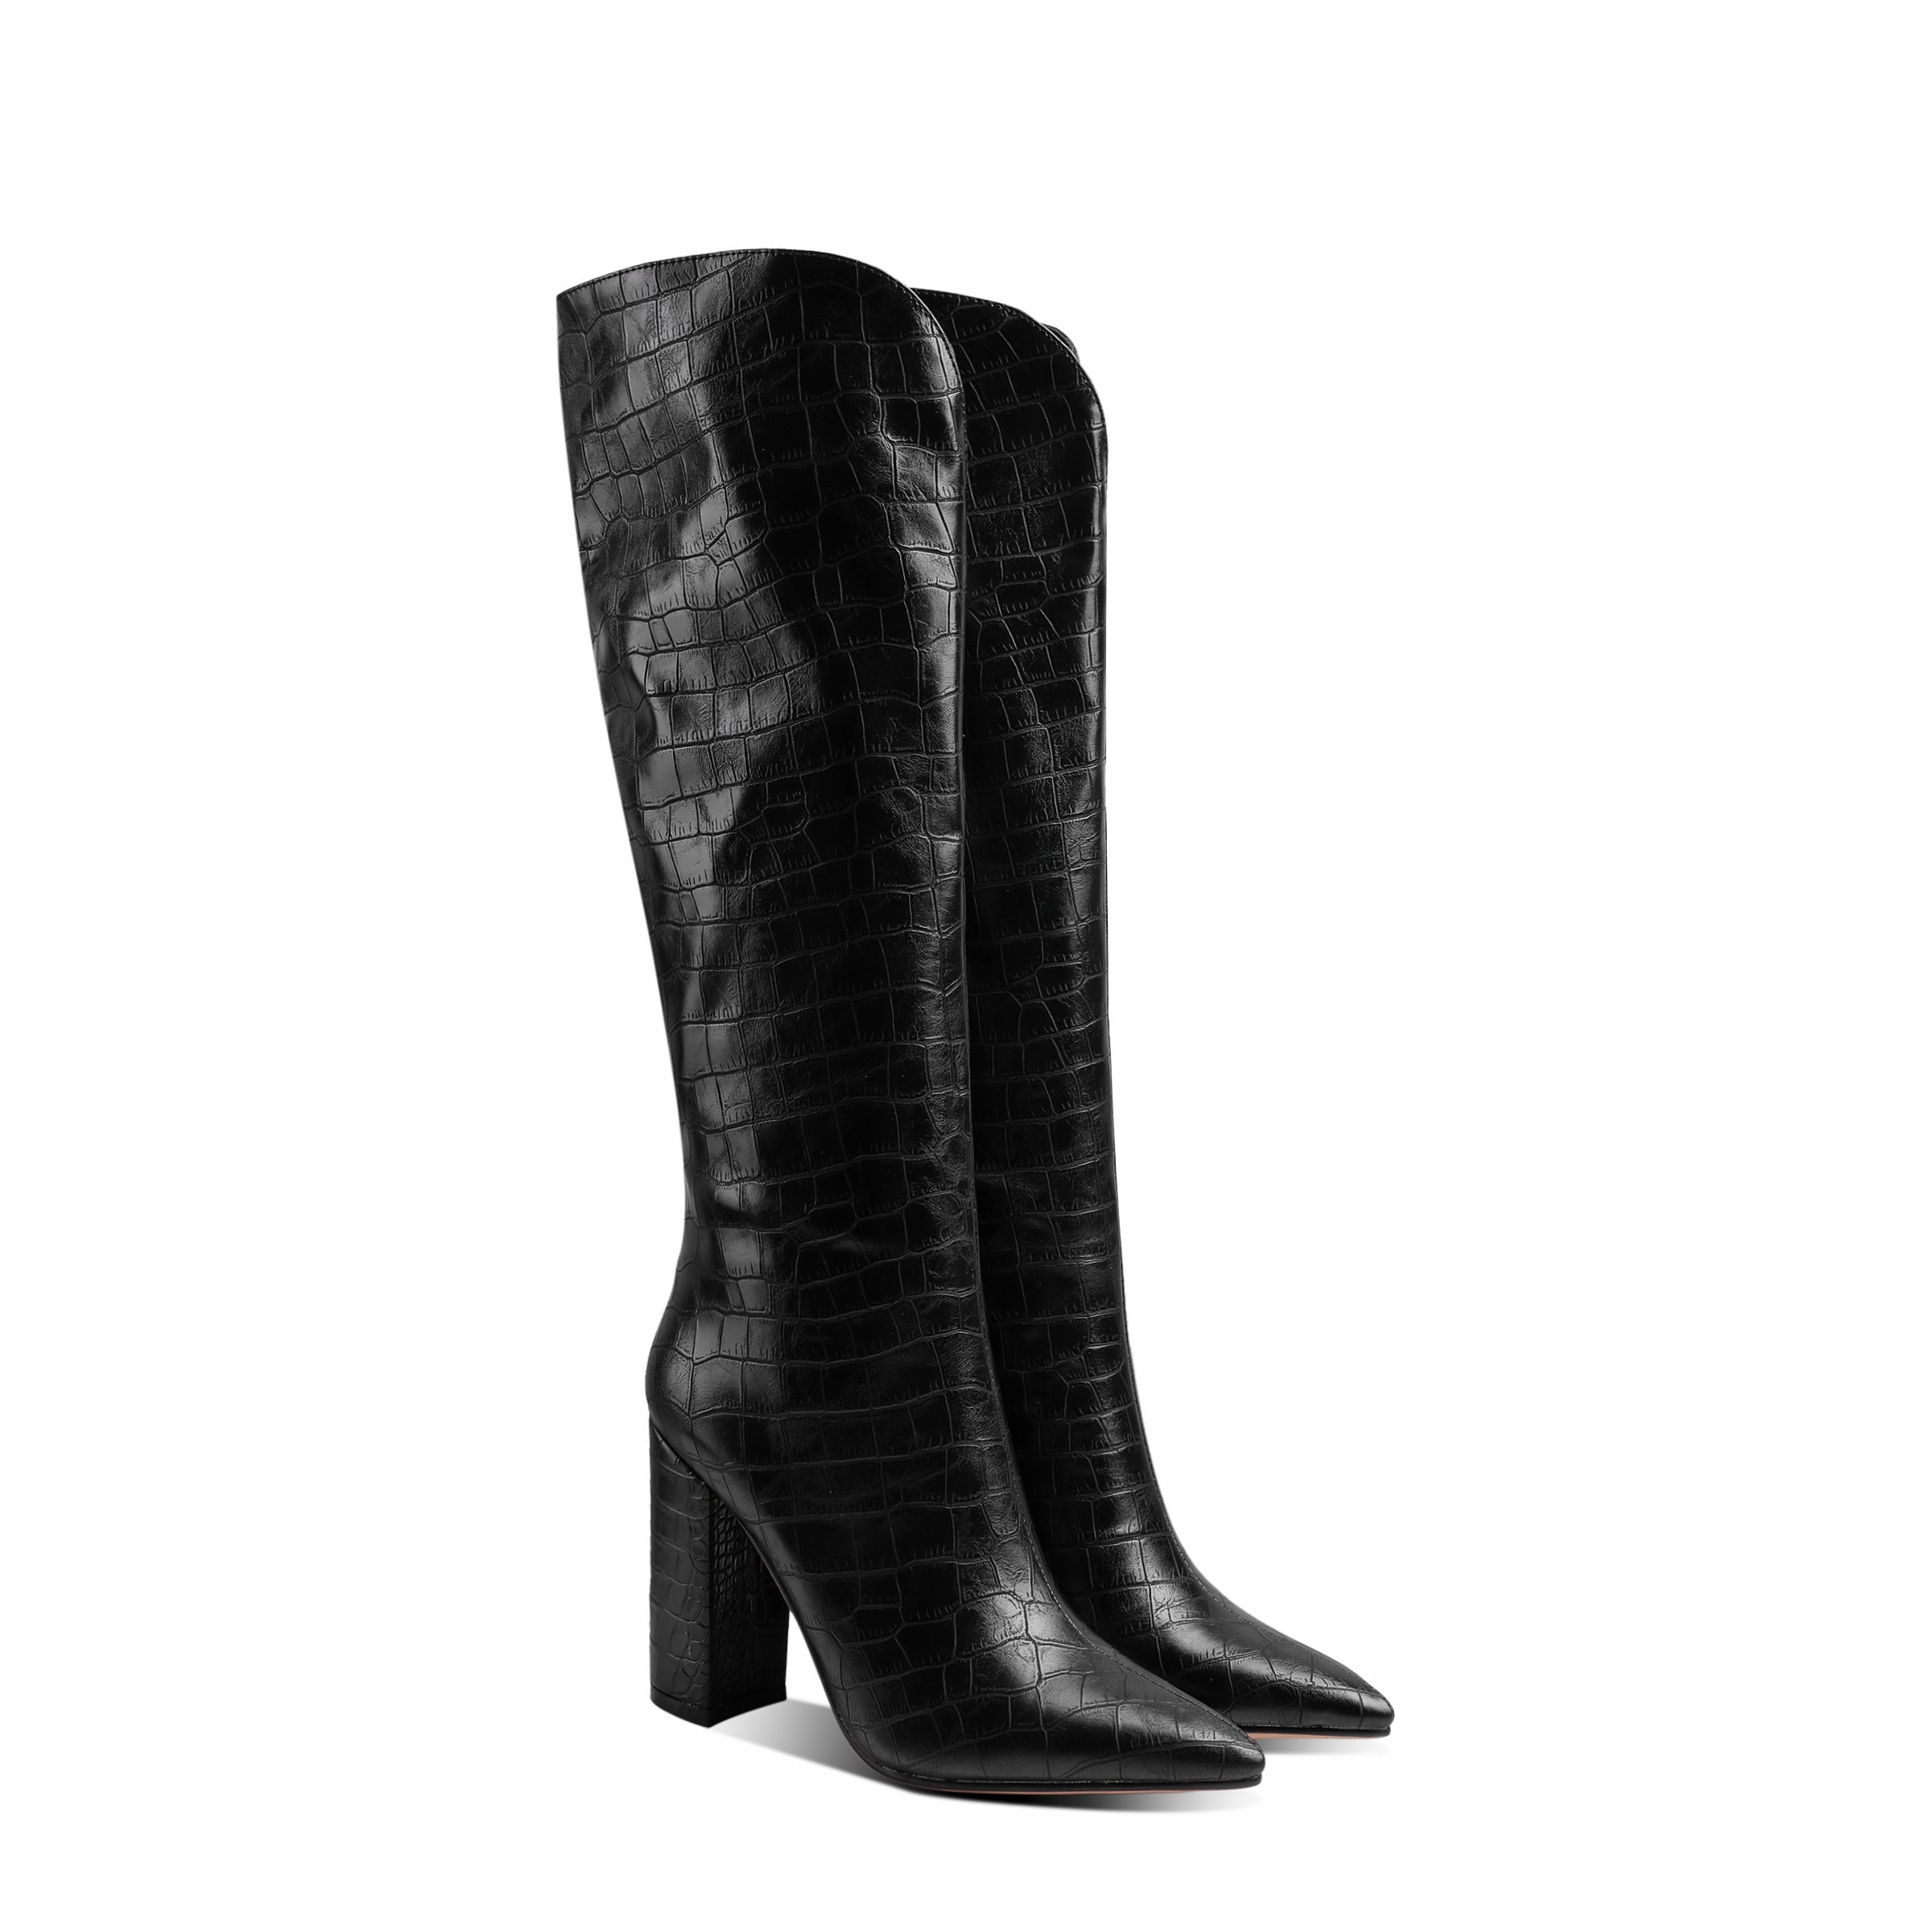 Bigsizeheels Pointed toe vintage big stone pattern boots - Black freeshipping - bigsizeheel®-size5-size15 -All Plus Sizes Available!